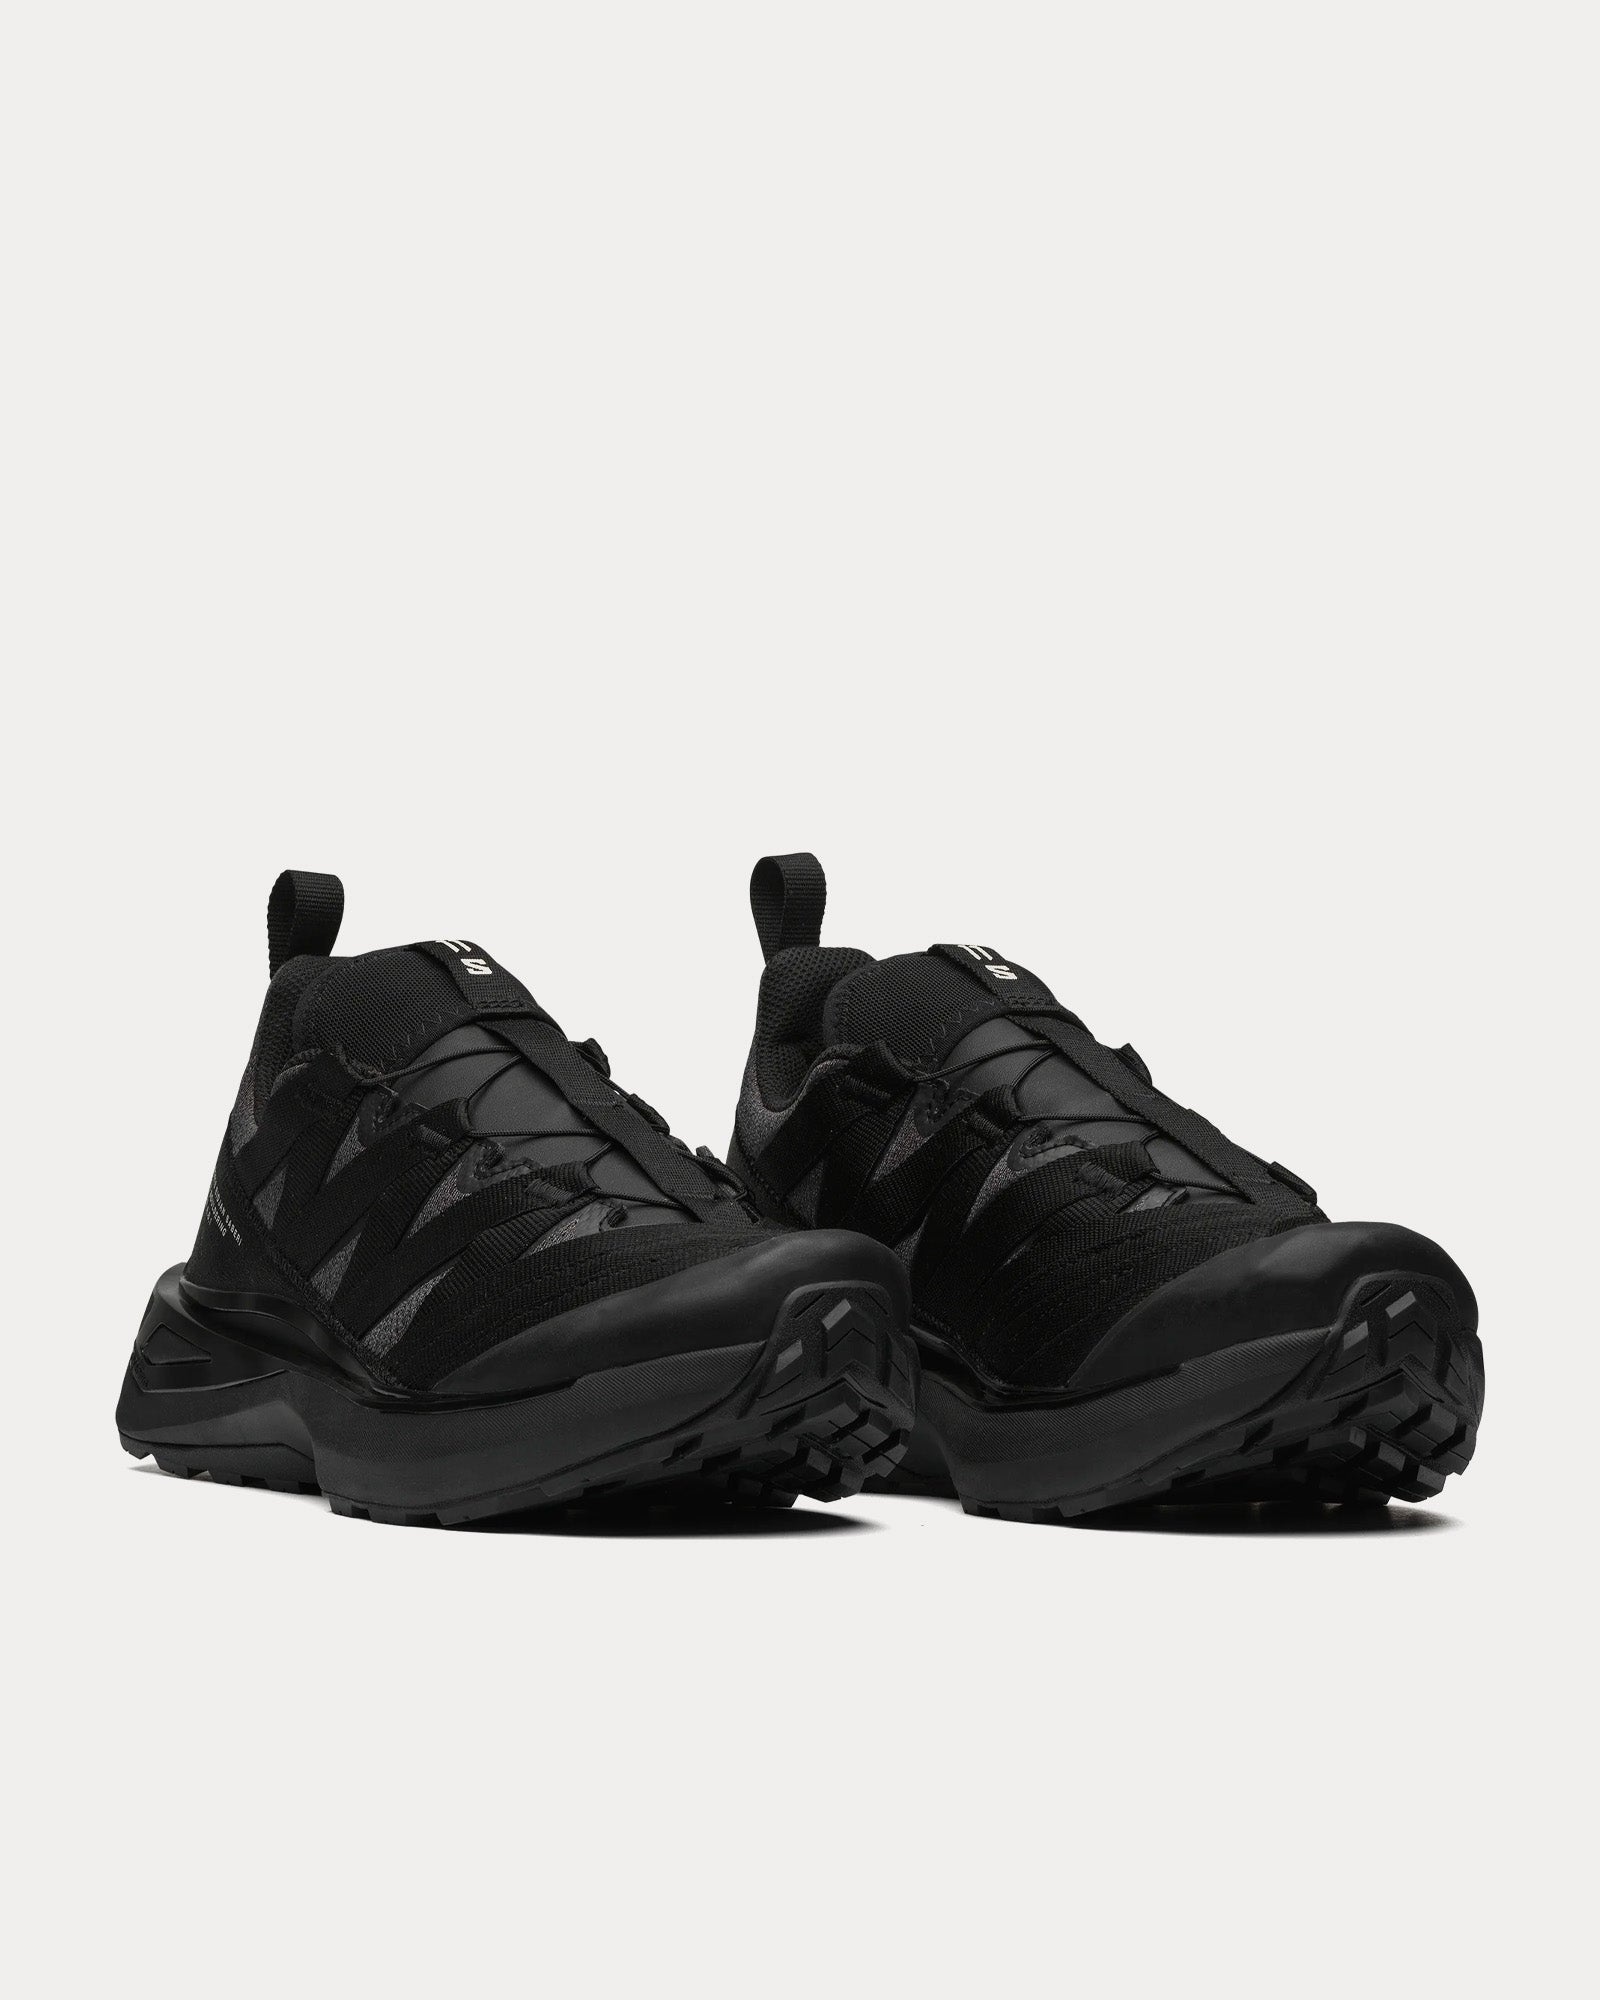 Salomon x 11 By Boris Bidjan Saberi - 11s Footwear A.B.1 Black / Black / Black Low Top Sneakers